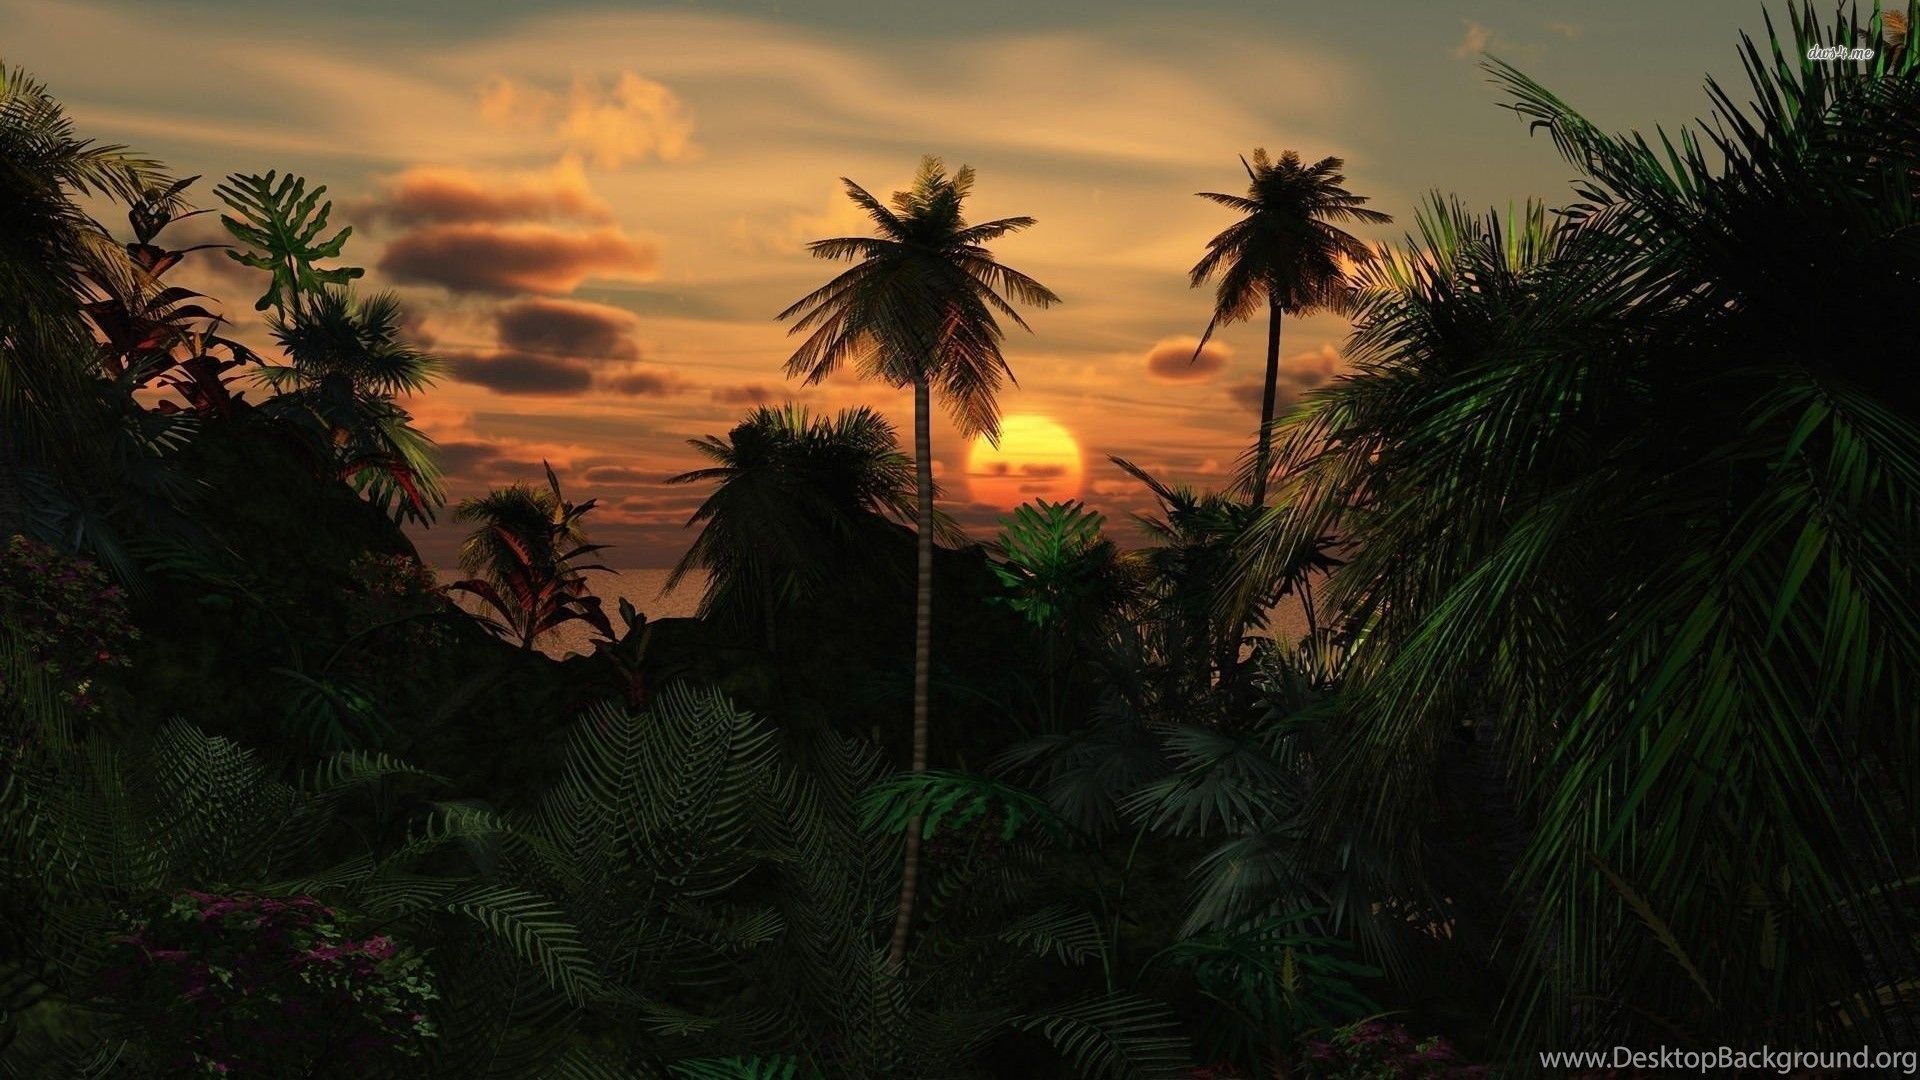 Jungle Sunset Wallpapers 4k Hd Jungle Sunset Backgrounds On Wallpaperbat